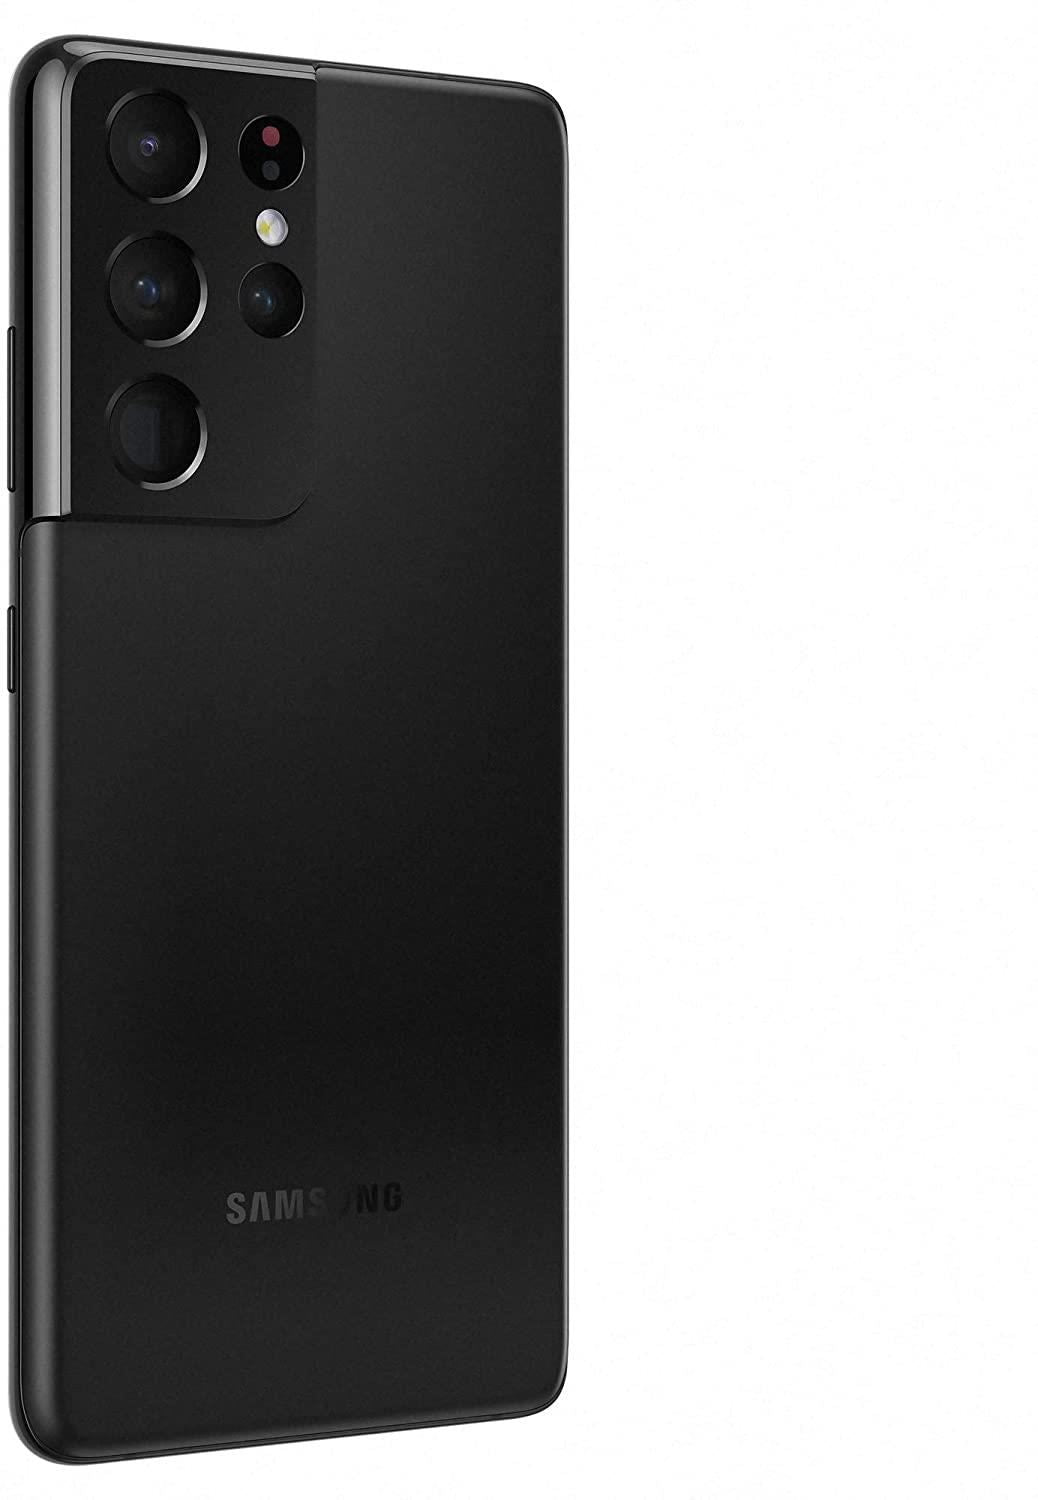 Samsung Galaxy S21 Ultra 5G Smartphone Unlocked Android